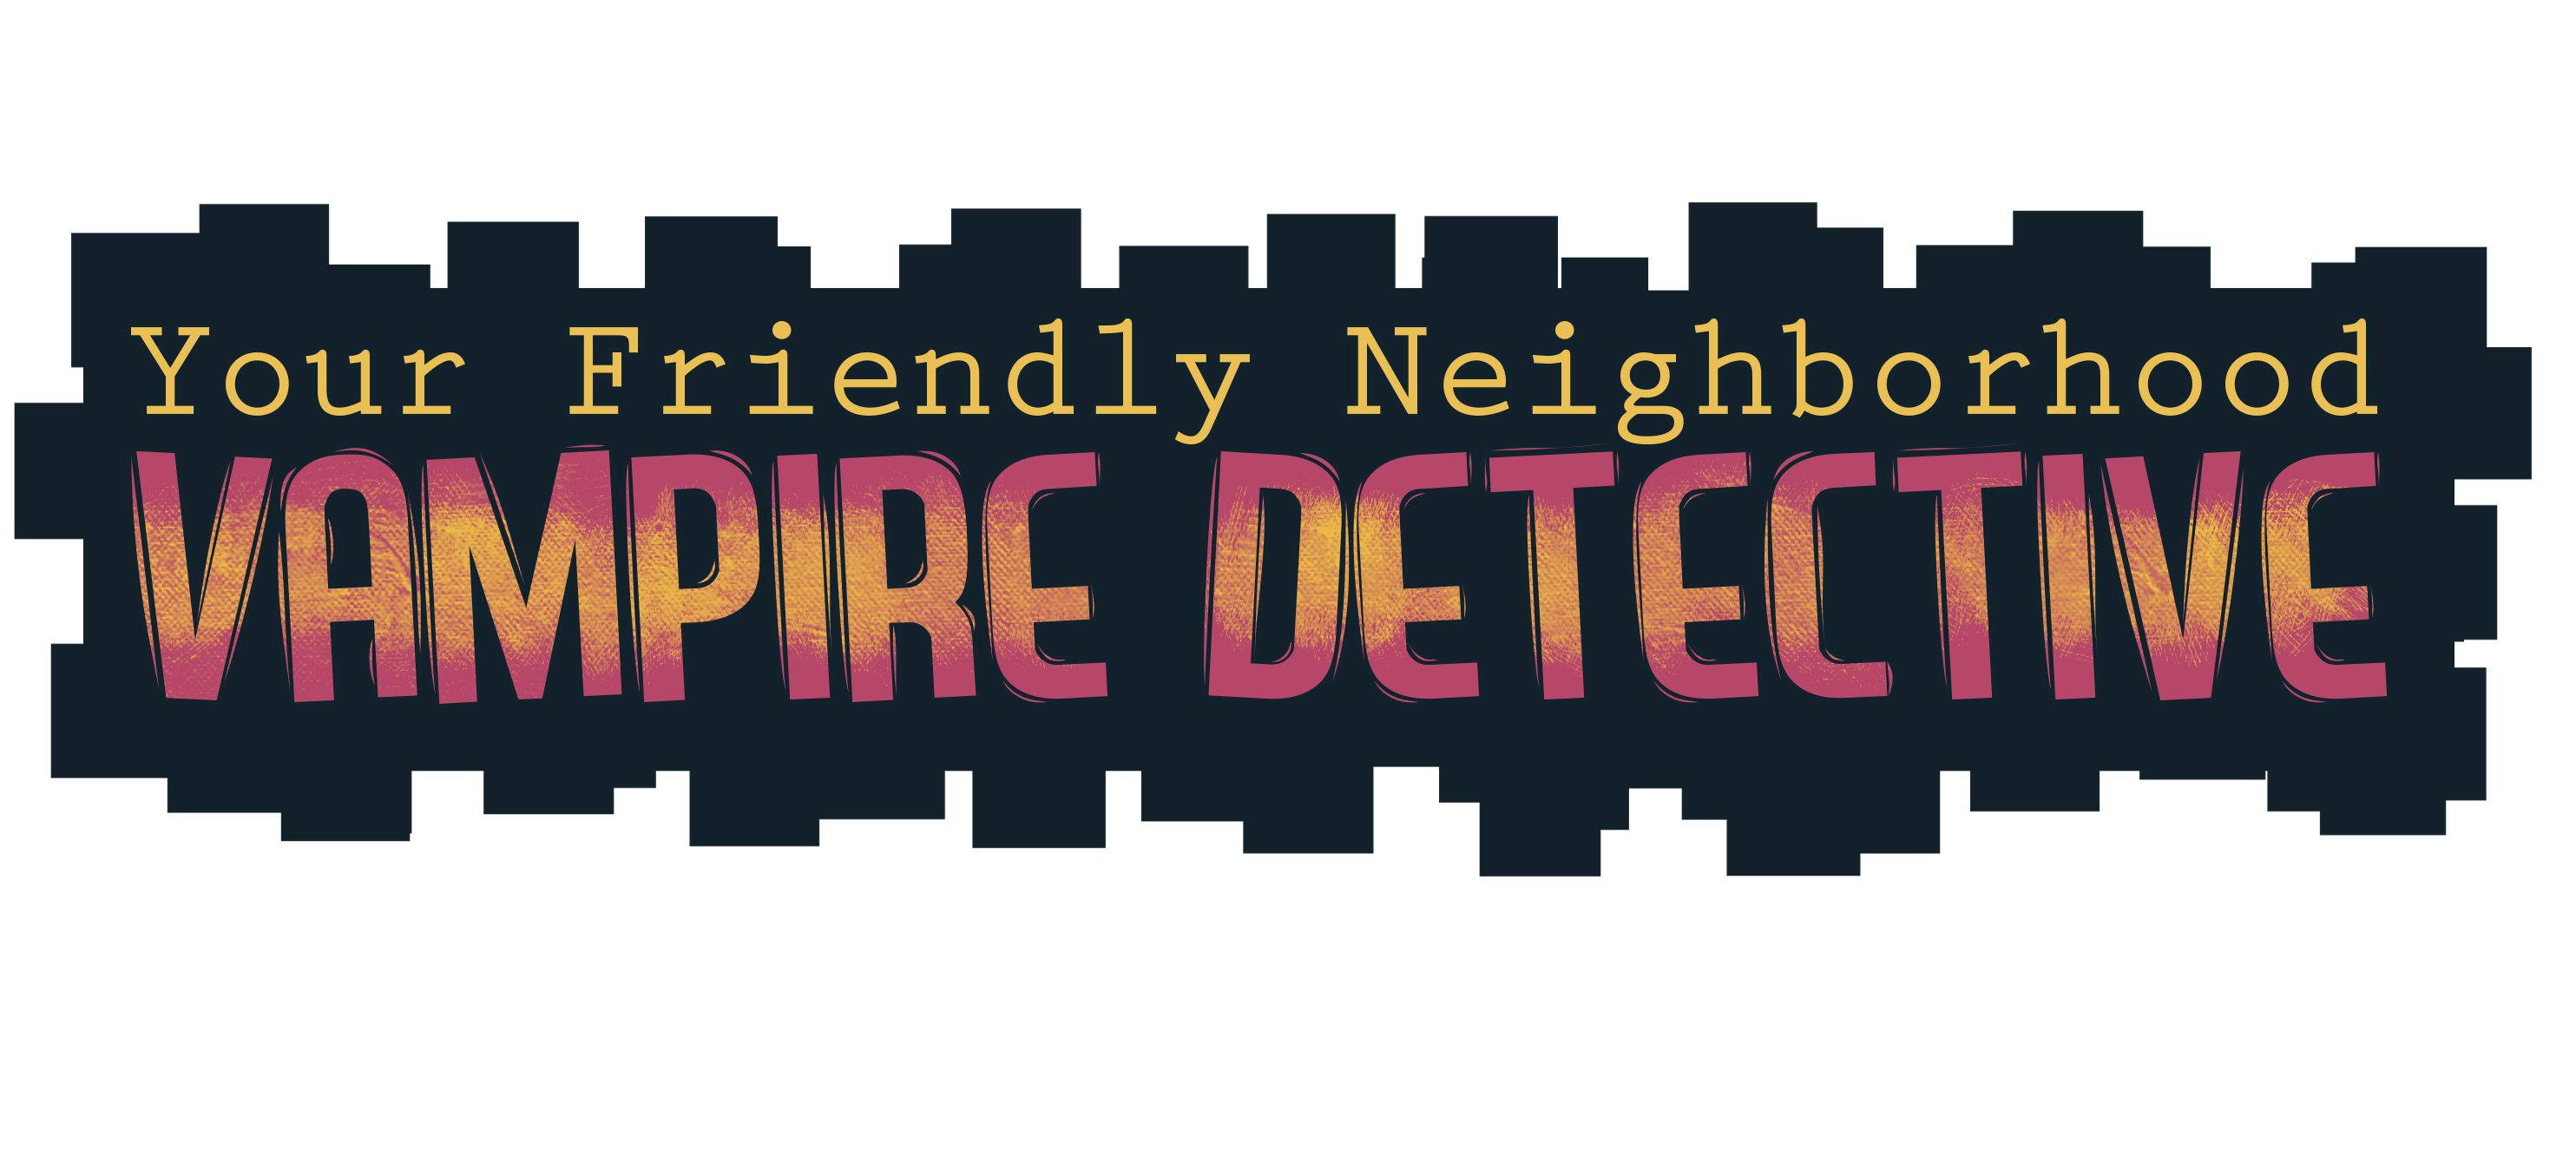 Your Friendly Neighborhood Vampire Detective